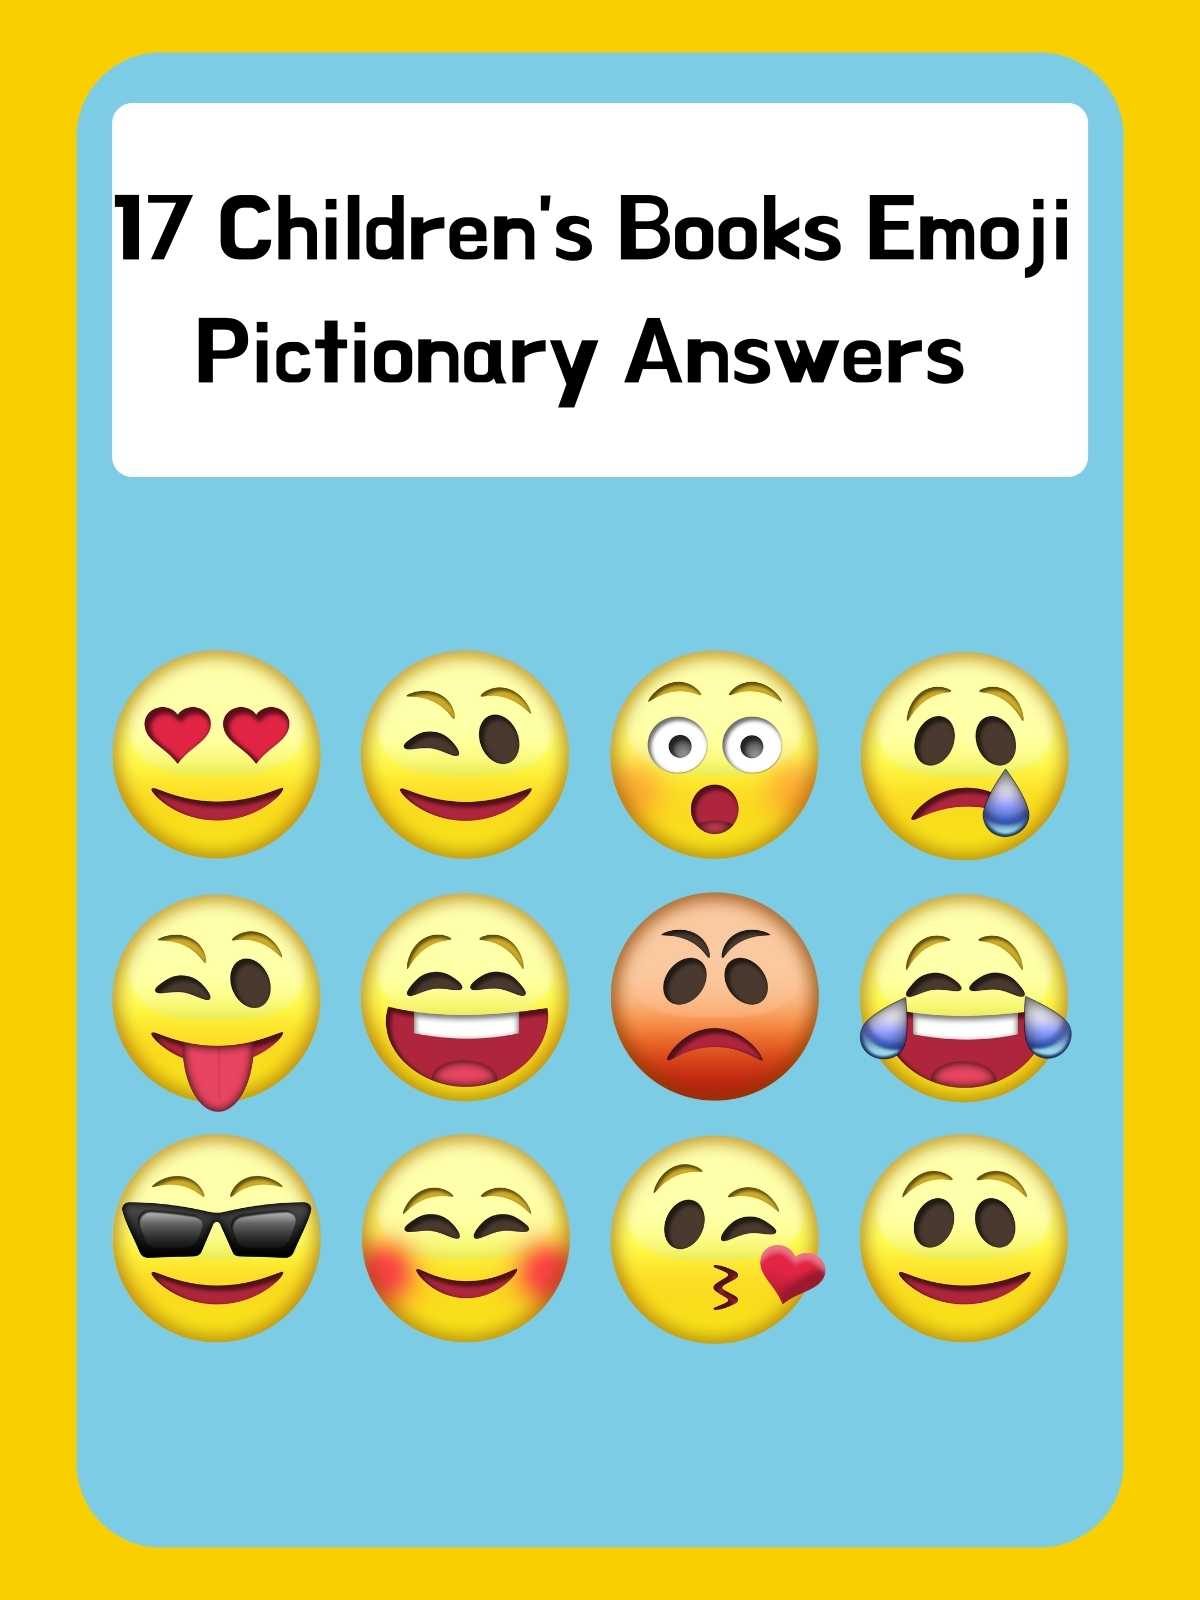 Children's books emoji puzzle answer key